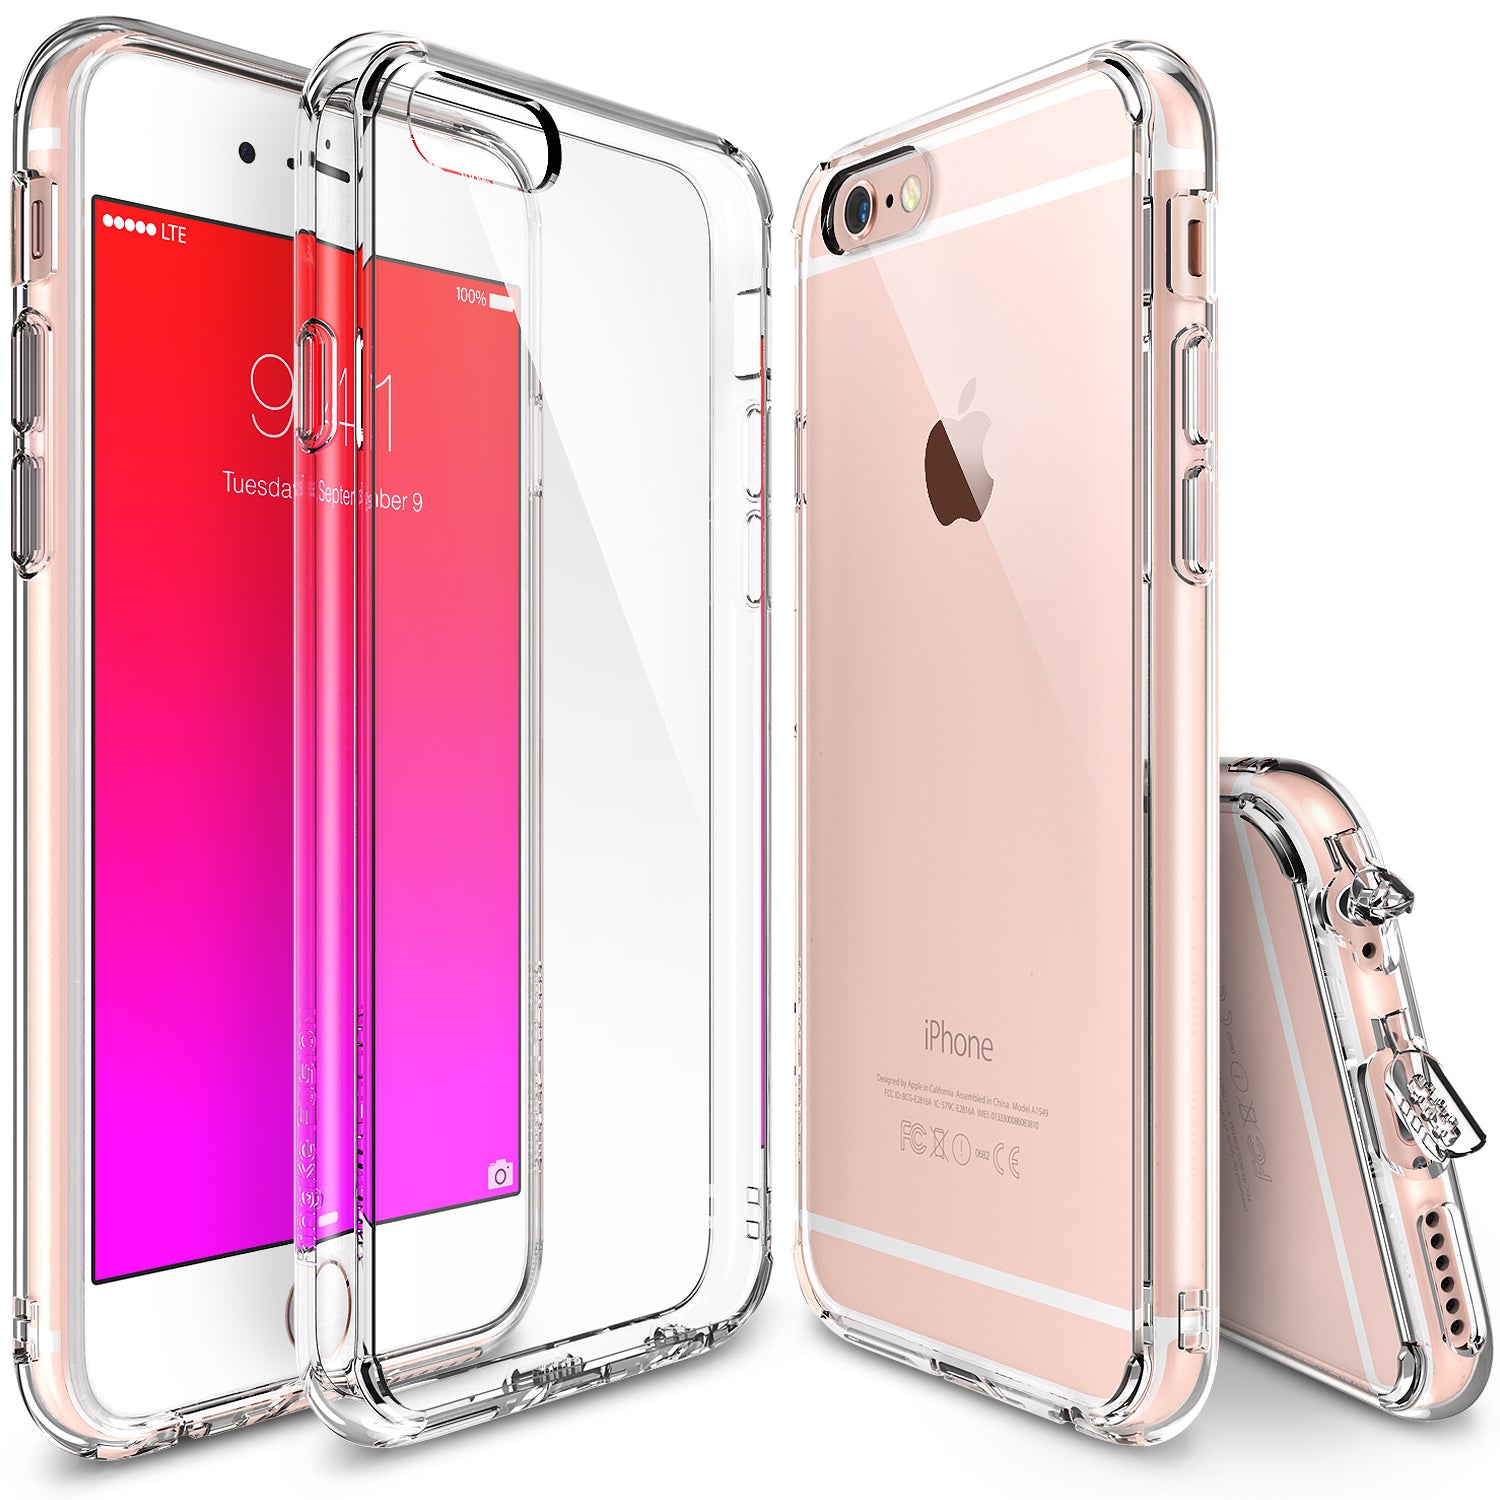 smal Tienerjaren Aanpassing Cases for iPhone 6 Plus/6s Plus | Ringke Fusion – Ringke Official Store